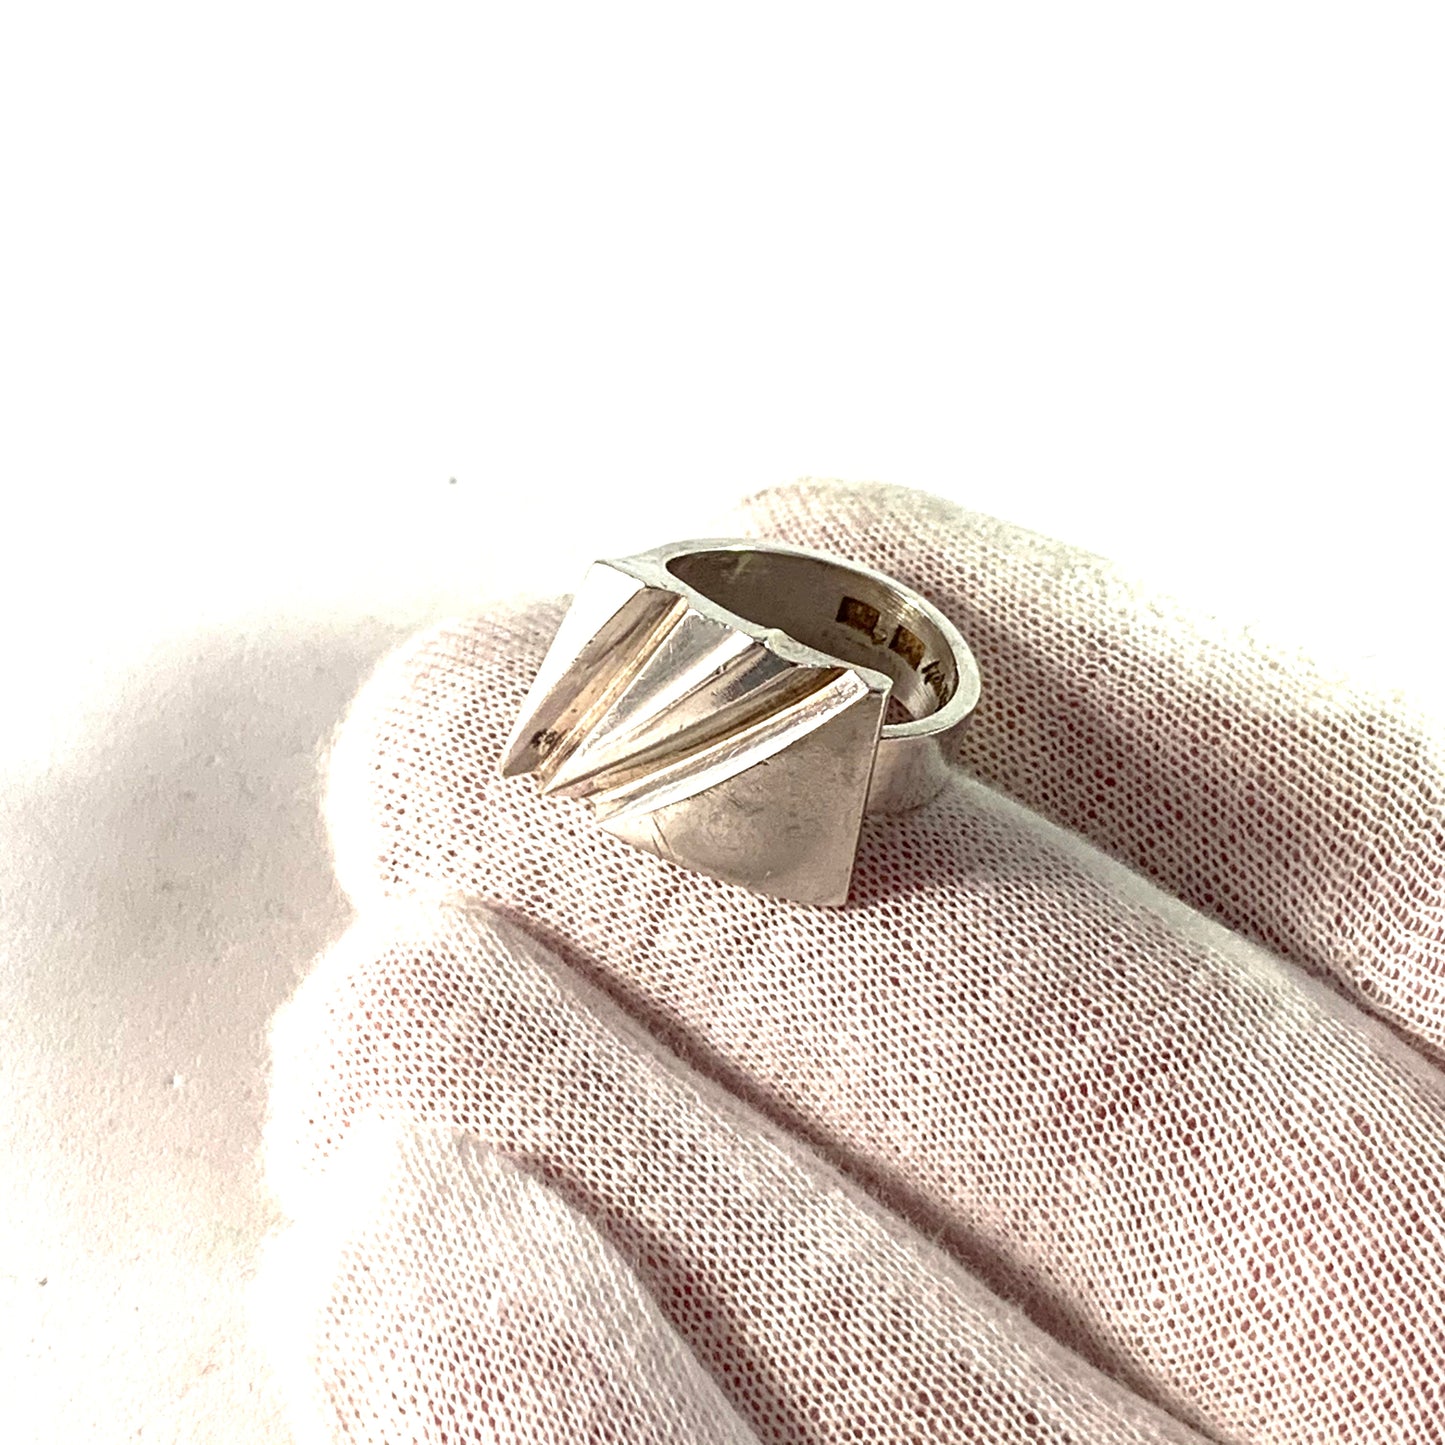 Matti Hyvärinen Finland Vintage Modernist Sterling Silver Adjustable Size Ring. Signed